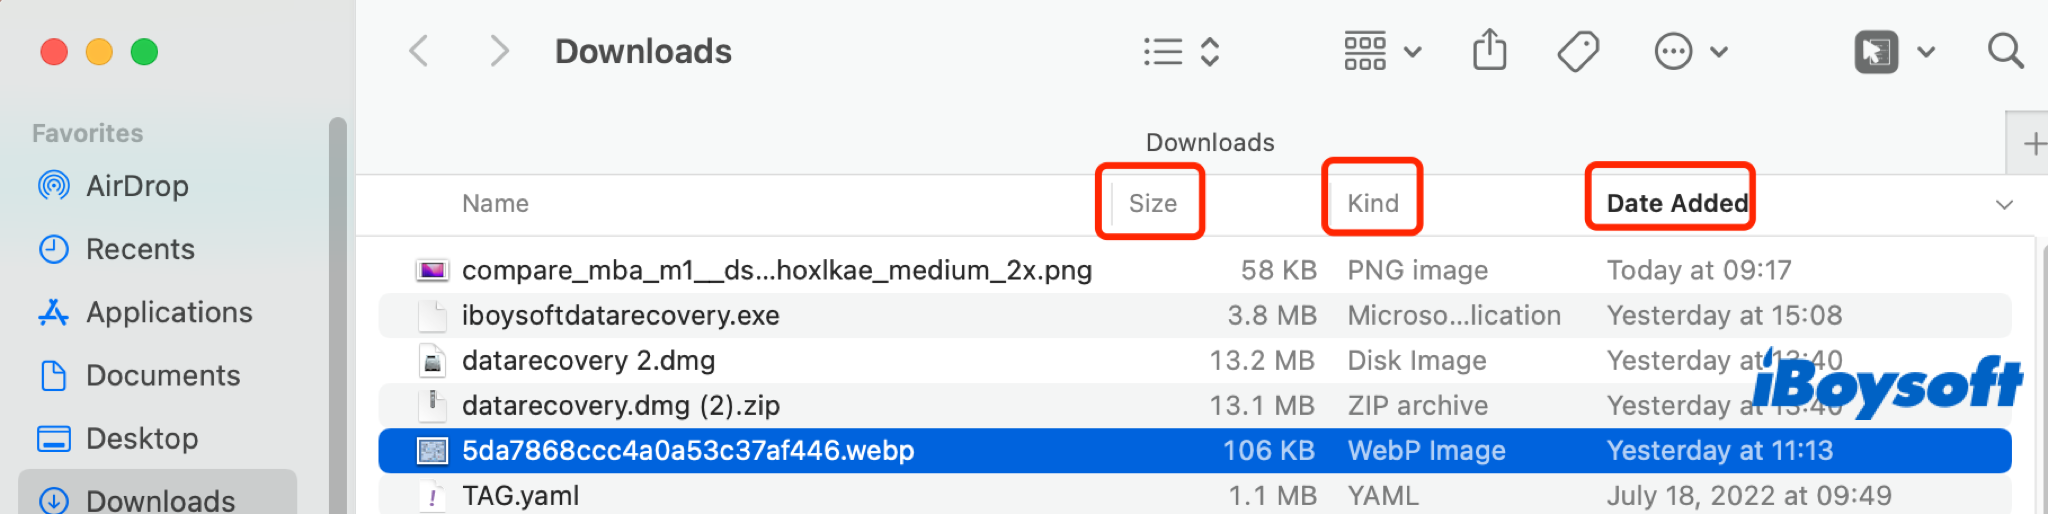 manage downloads on Mac